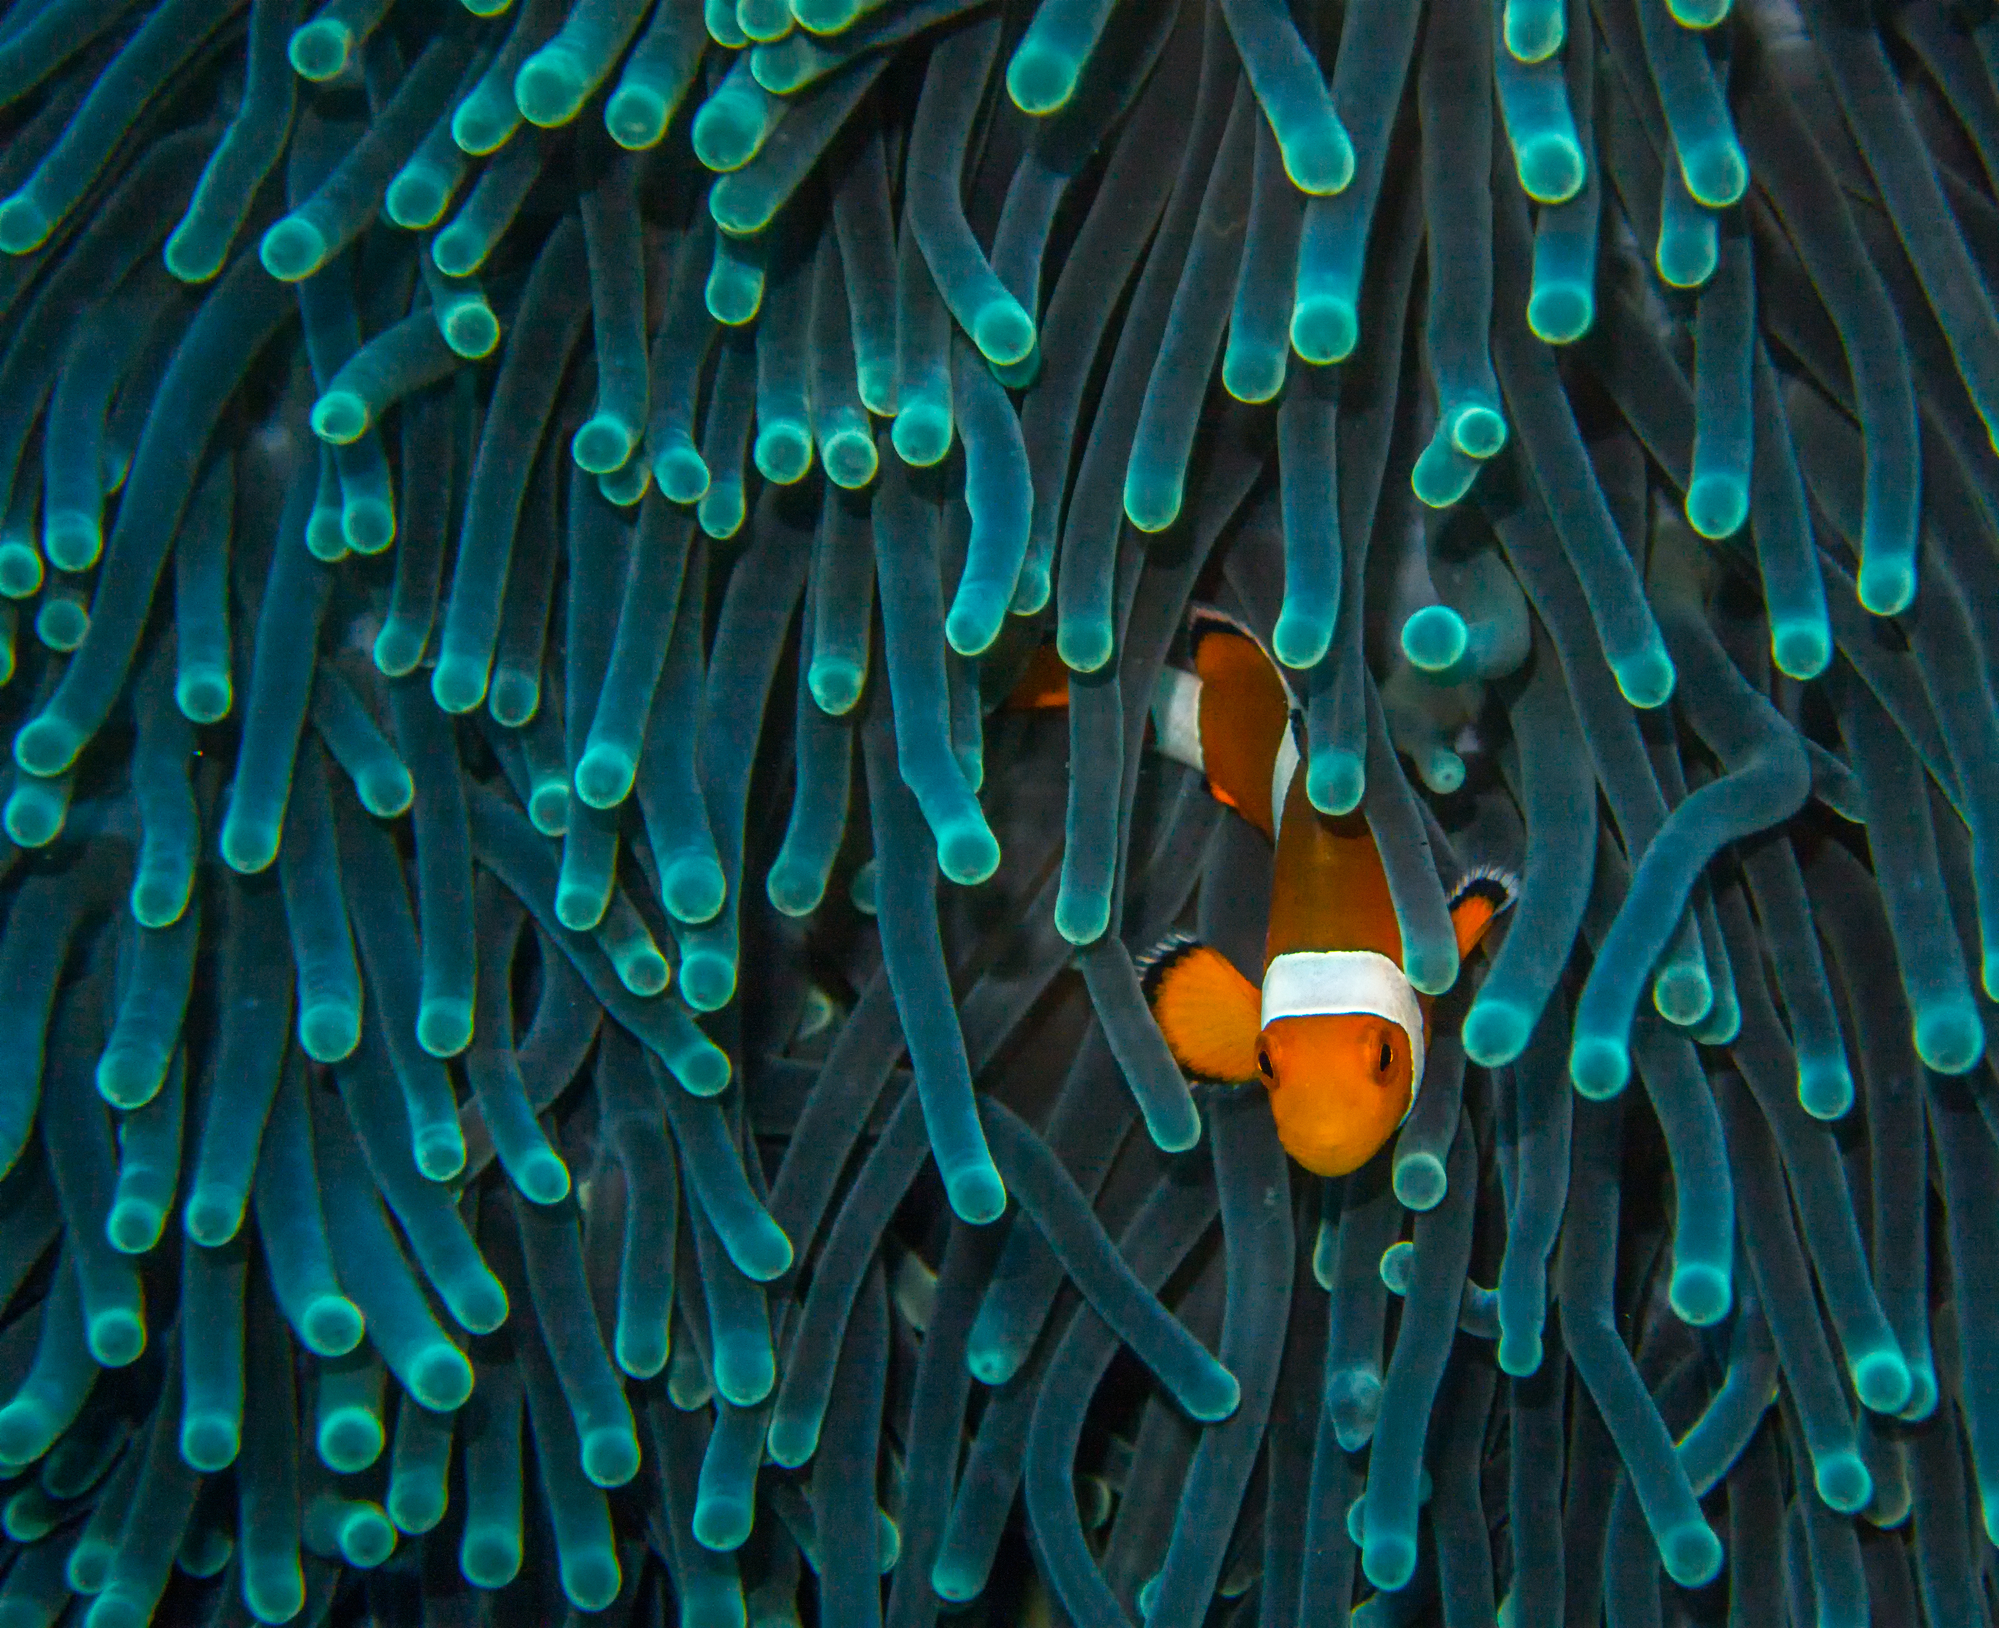 wallpaper nature underwater with clown fish